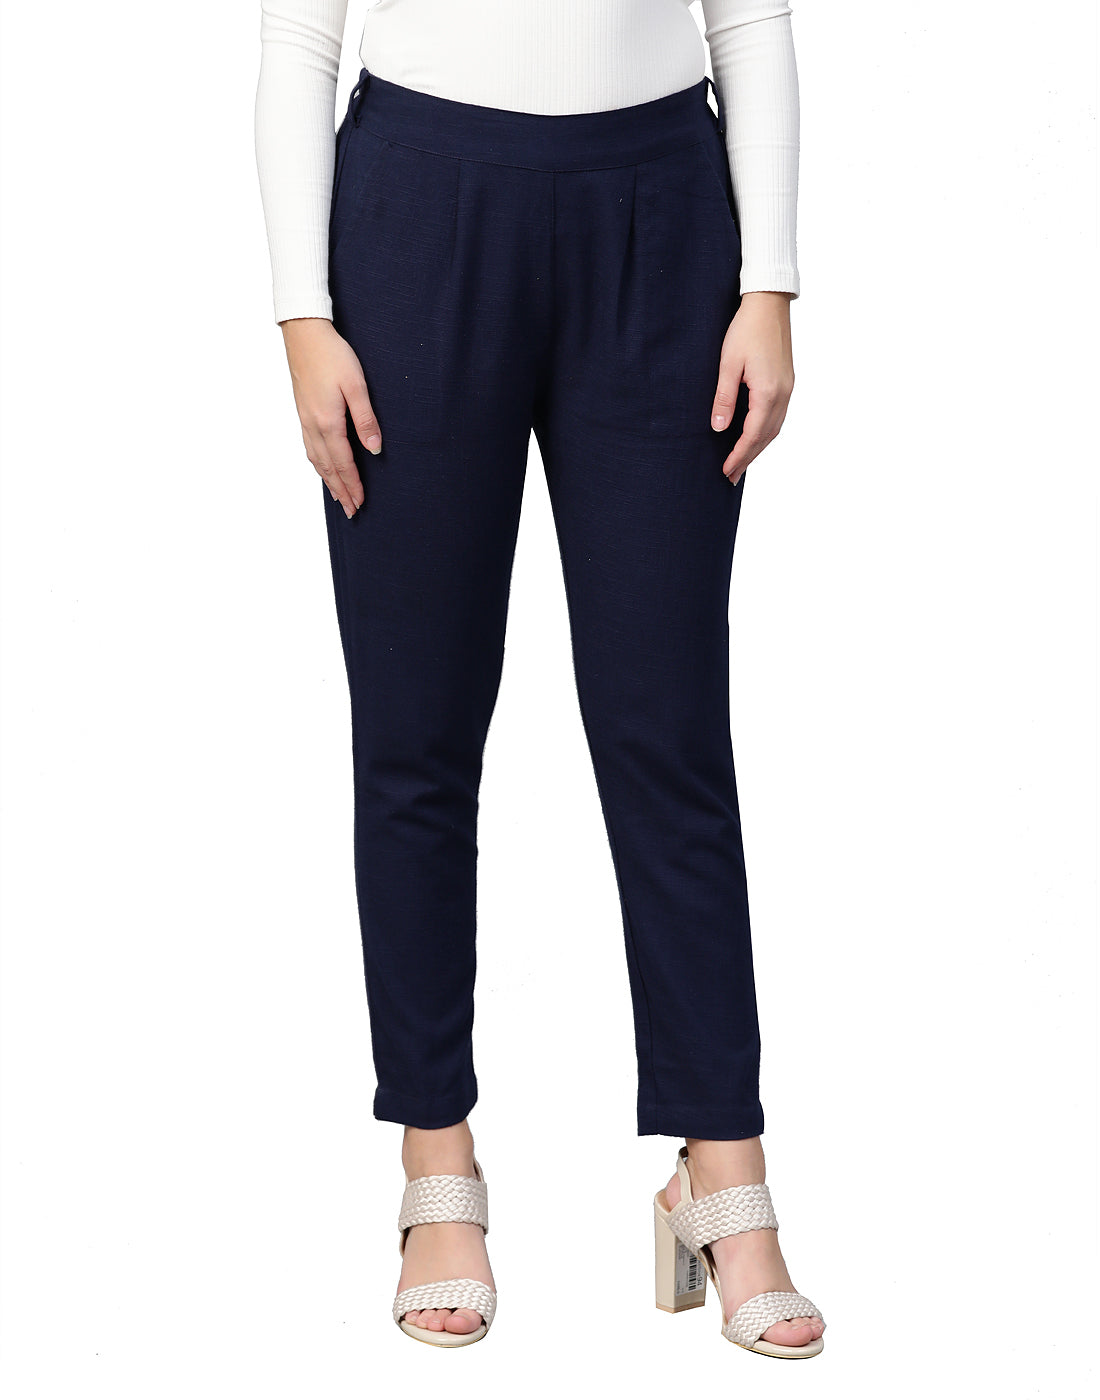 Smarty Pants women's cotton lycra bell bottom navy blue formal trouser